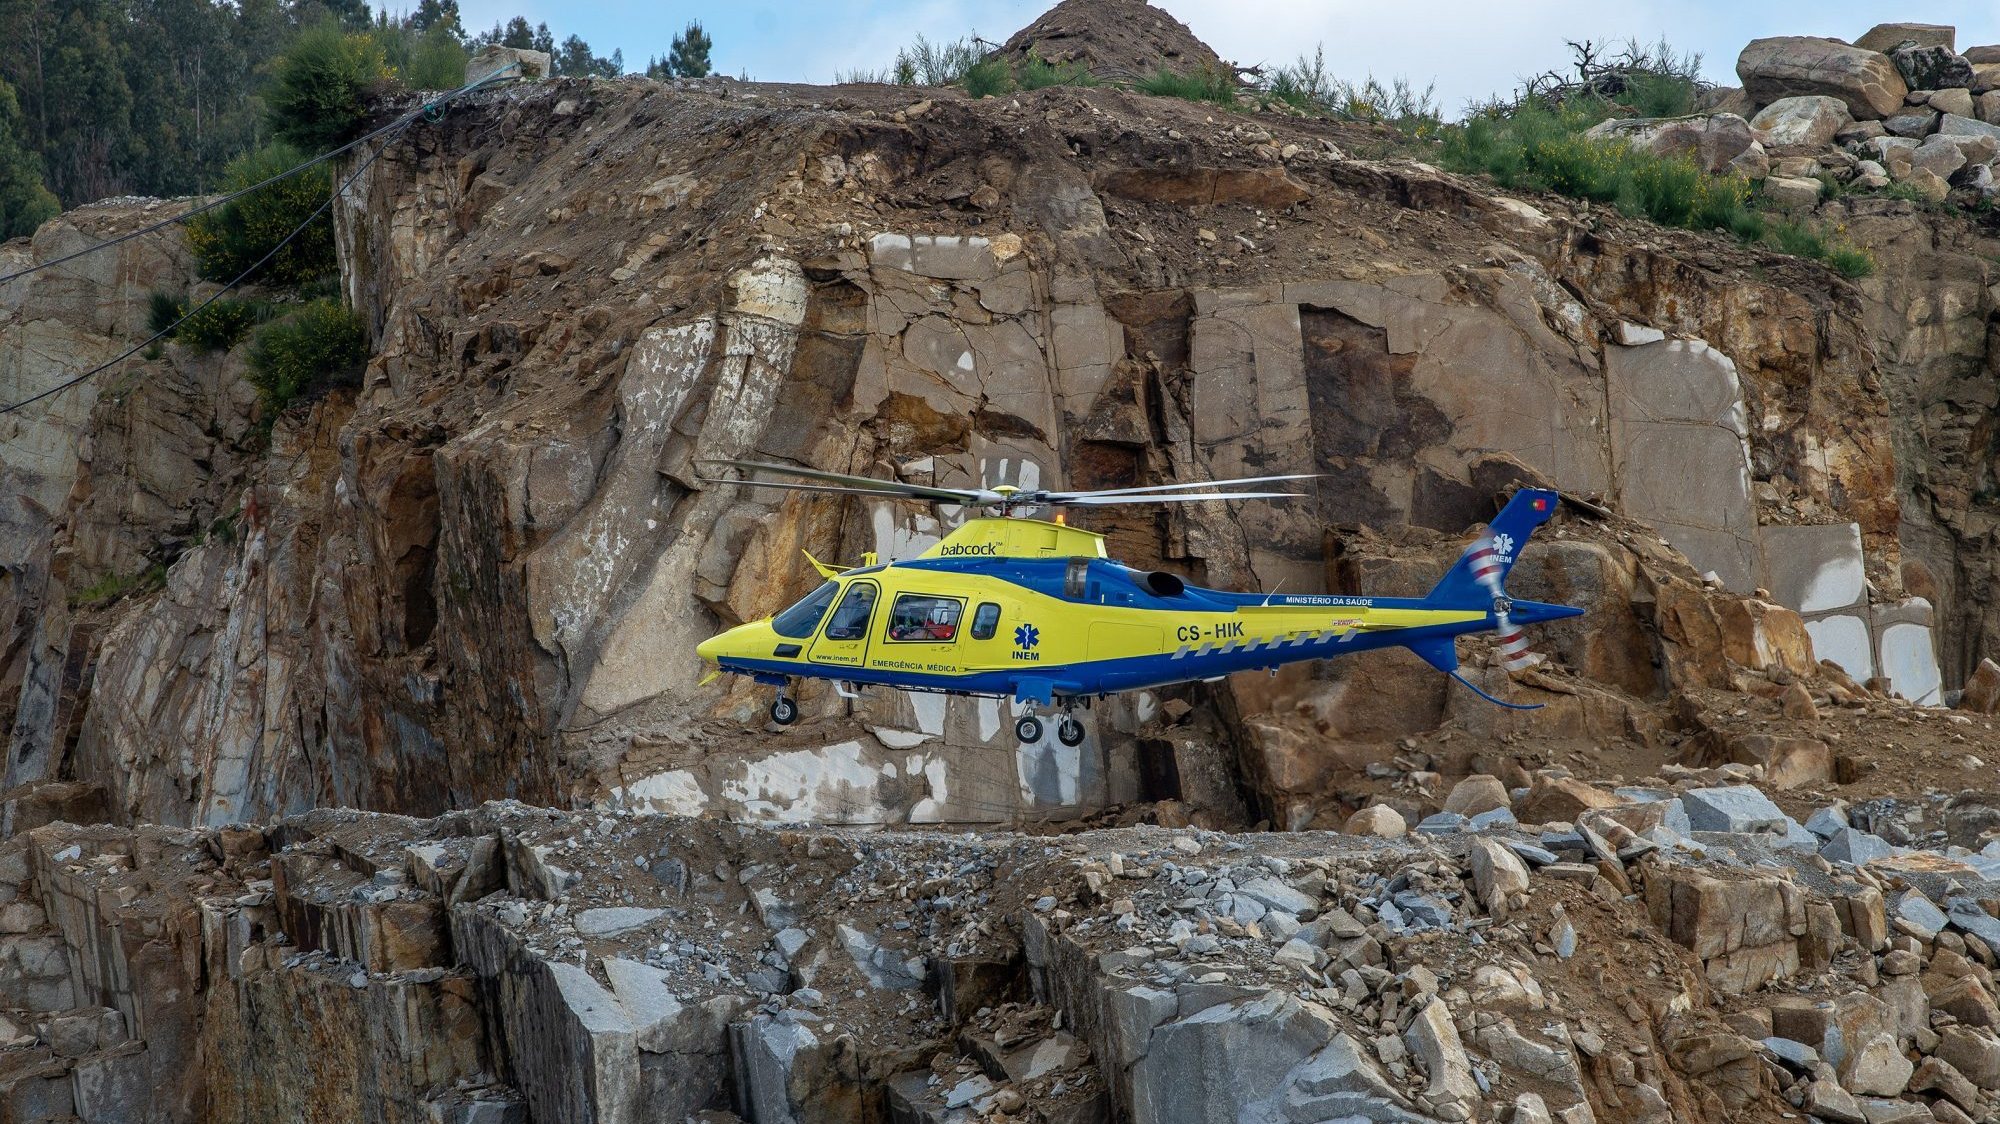 A vítima grave foi levada para o Centro Hospitalar e Universitário de Coimbra, pelo helicóptero do INEM